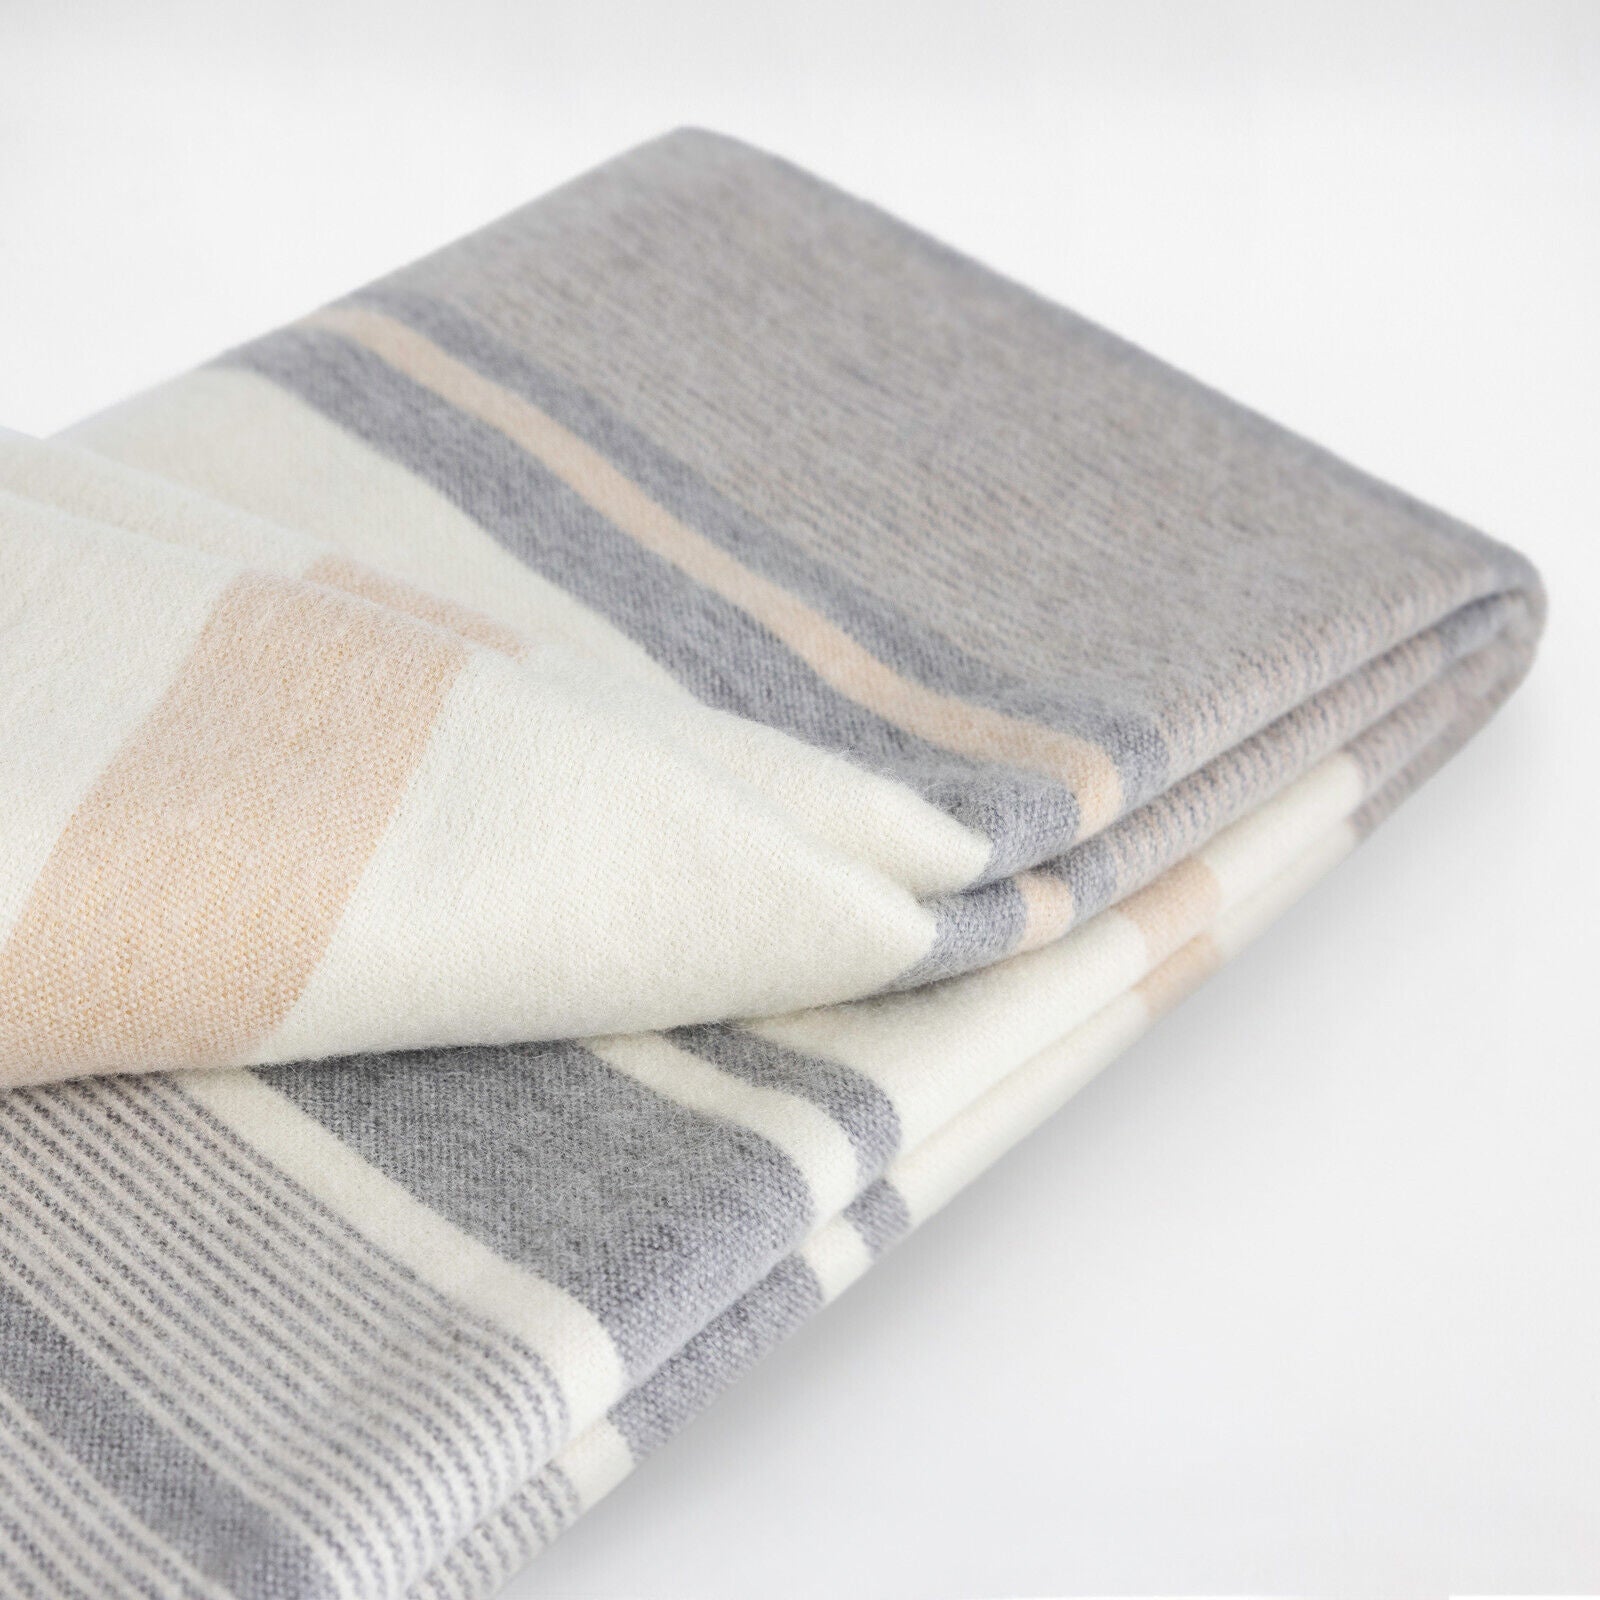 Yankuam - Baby Alpaca Wool Throw Blanket / Sofa Cover - Queen/Queen PLUS - earth sand stripes pattern